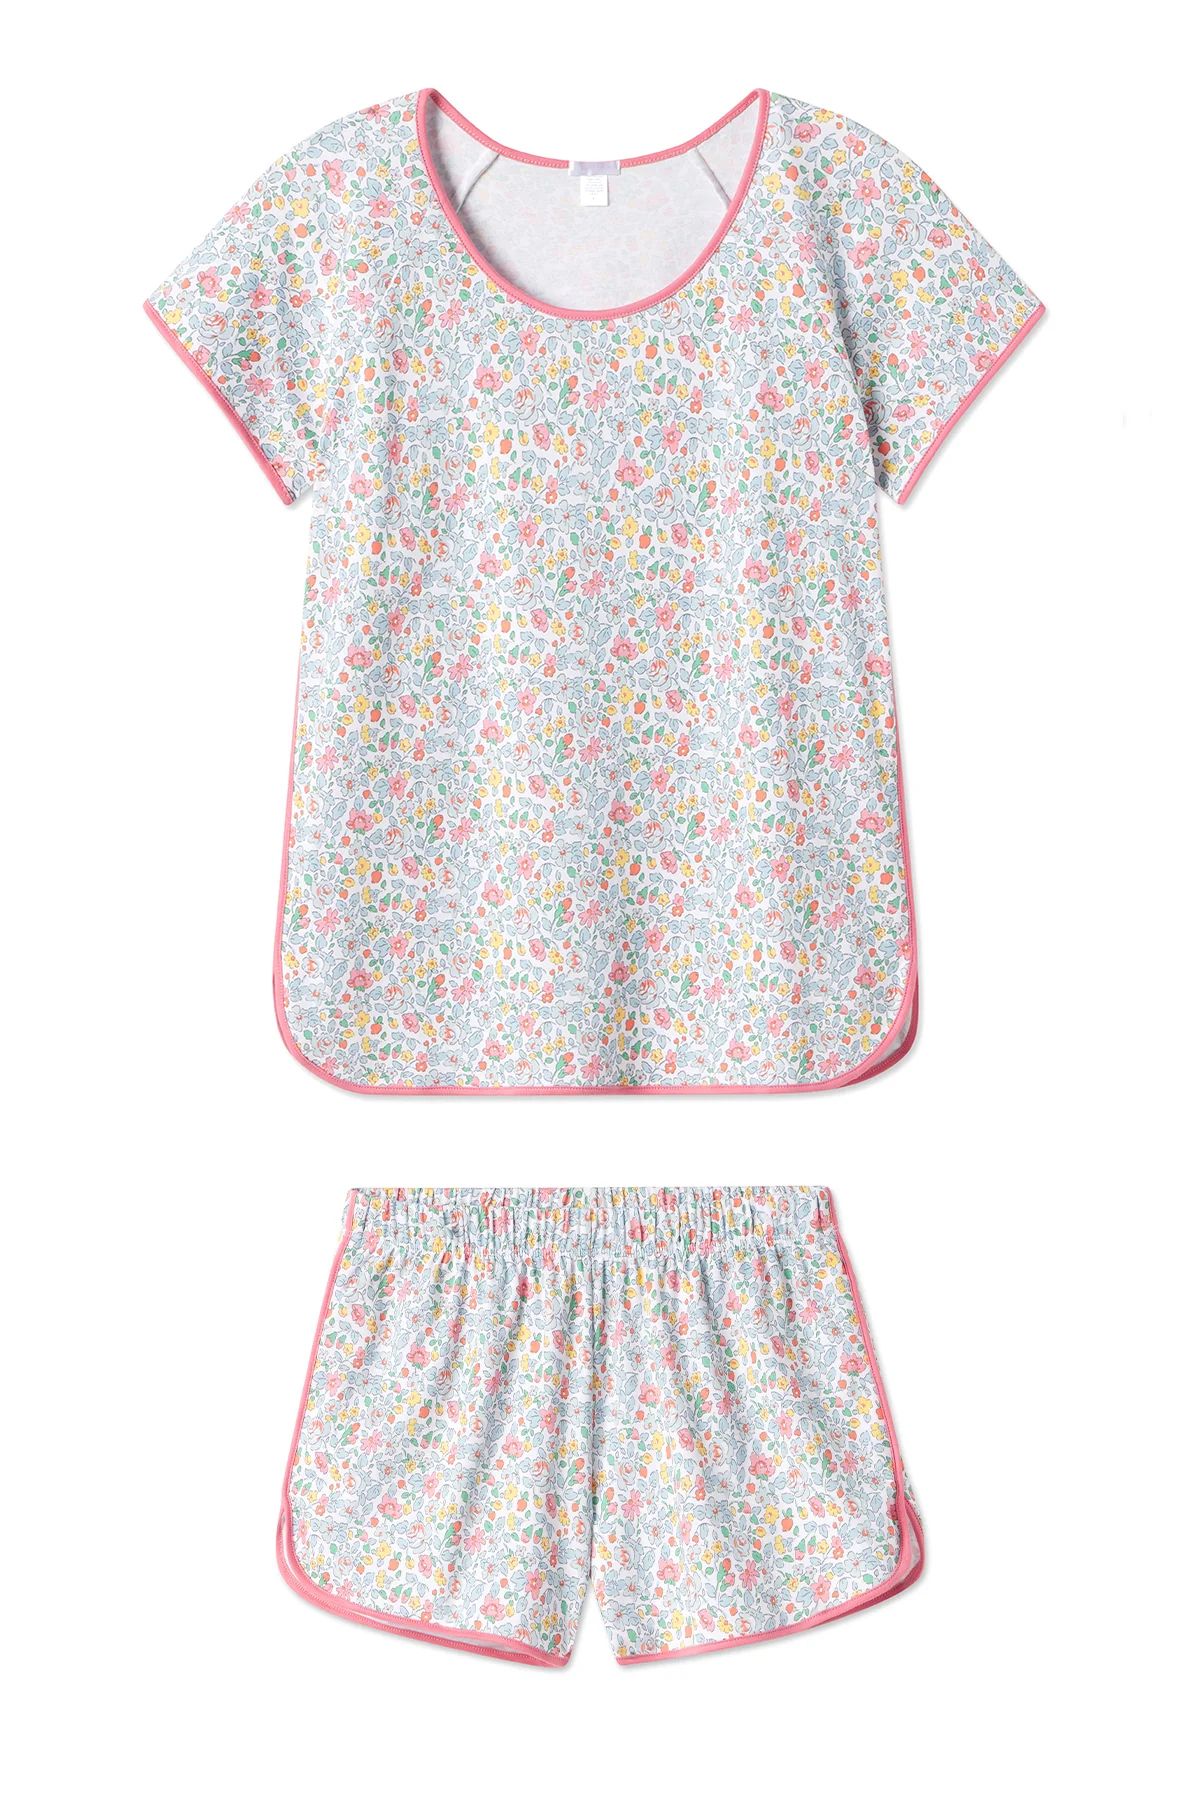 Pima Shorts Set in Elizabeth Floral | Lake Pajamas